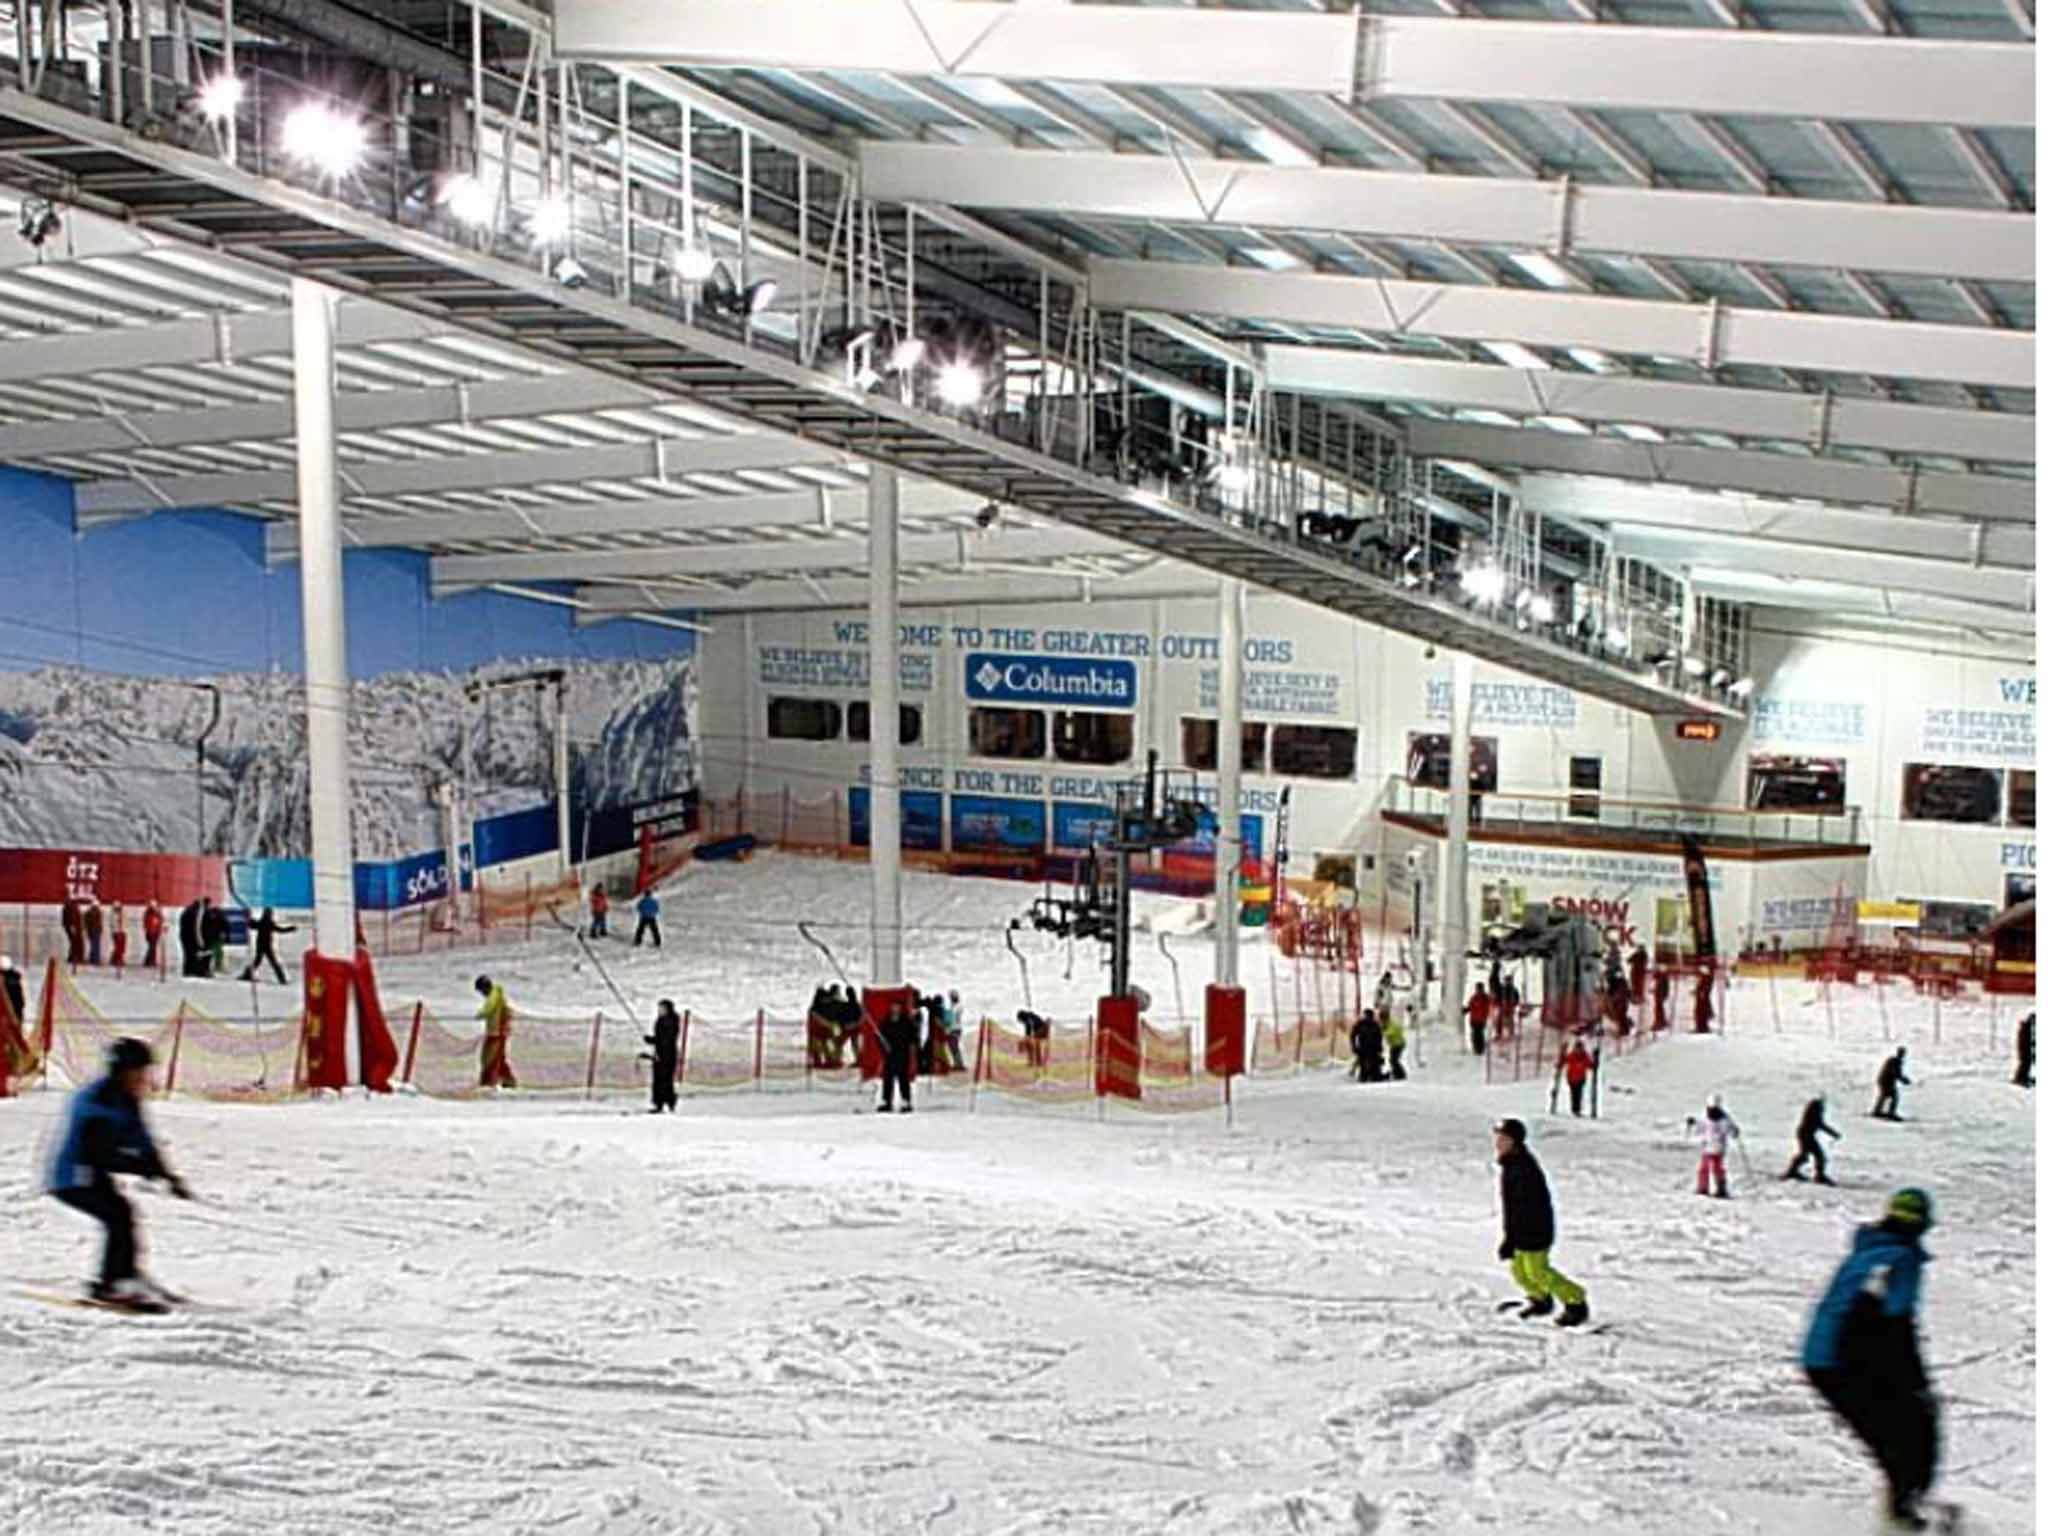 The Snow Centre